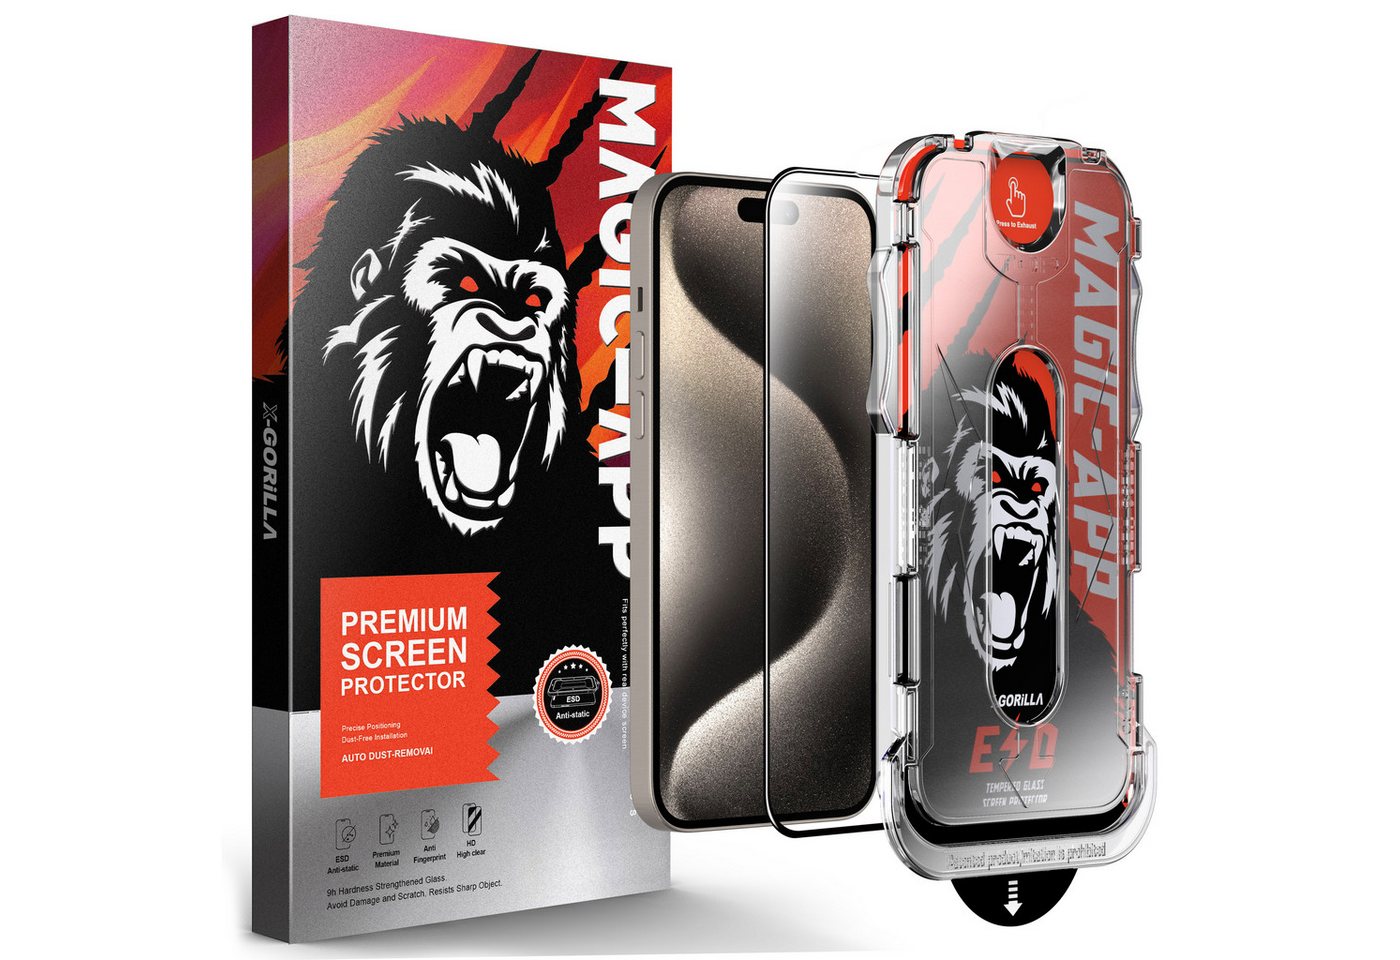 Protectorking Schutzfolie 5x X-Gorilla Tempered 9H Glass für iPhone 12 Pro MAGIC-APP 3D KLAR, (5-Stück), echtes Tempered 9H Panzerhartglas schutzglas 3D-KLAR Screen Protector von Protectorking